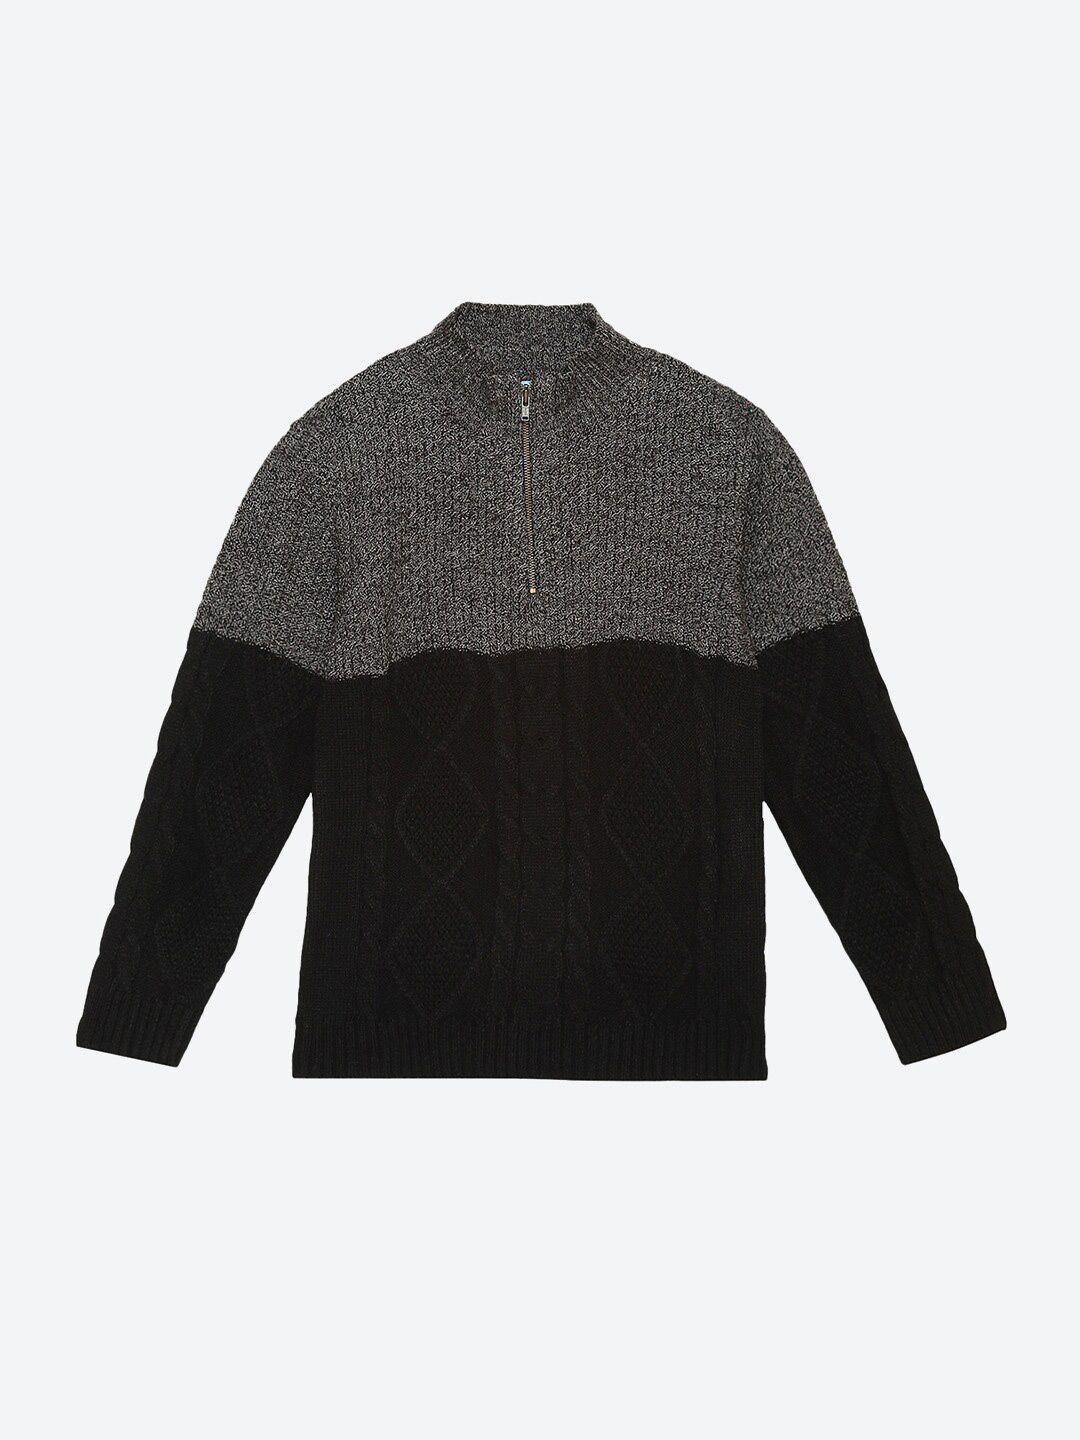 2bme boys cable knit self design half zipper acrylic pullover sweater